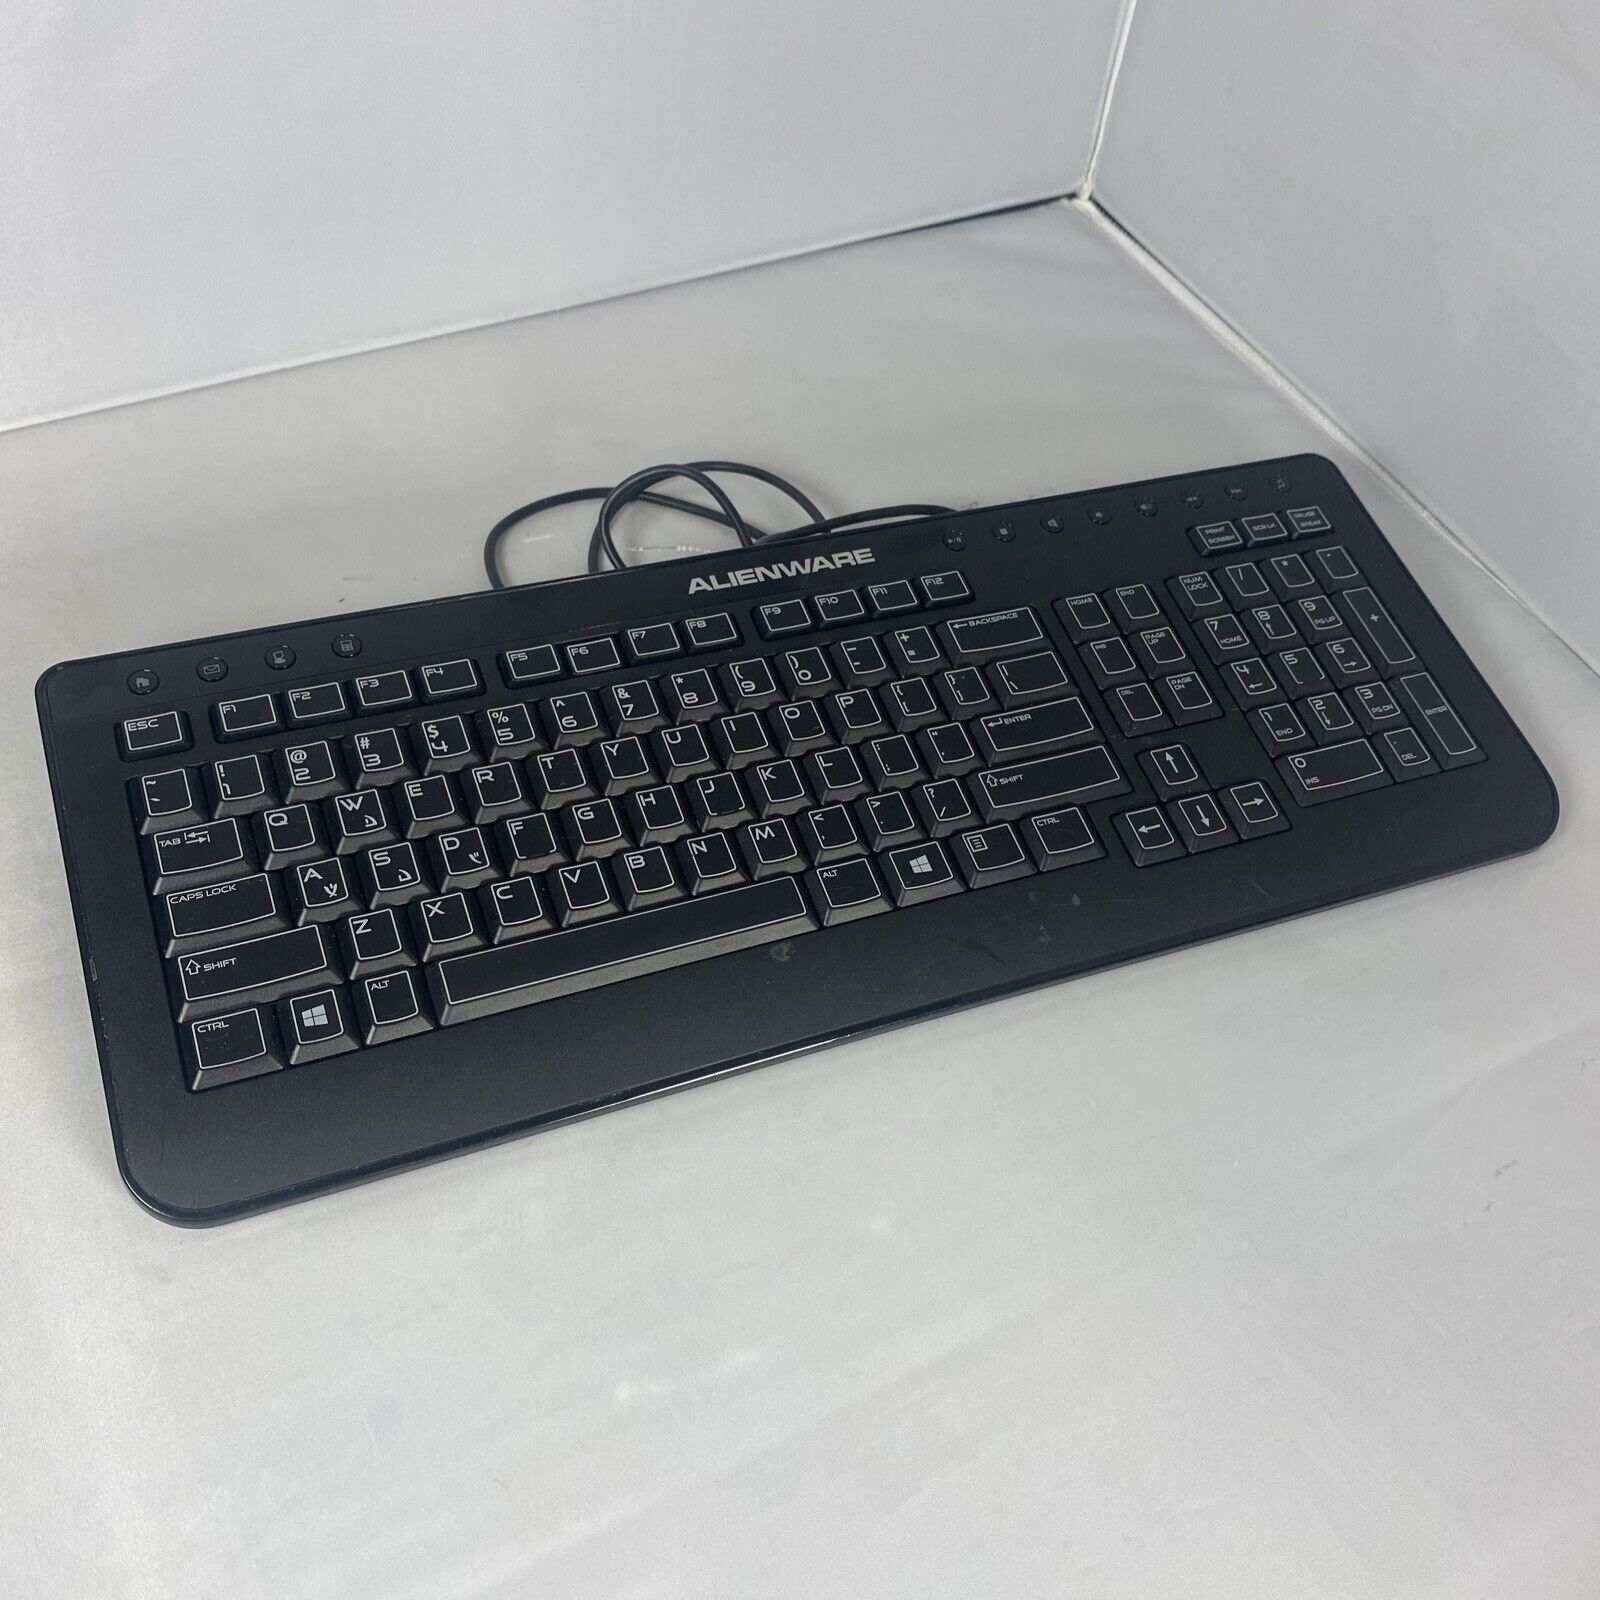 ALIENWARE USB Keyboard SK-8165 Multimedia Keys Black Tested Working